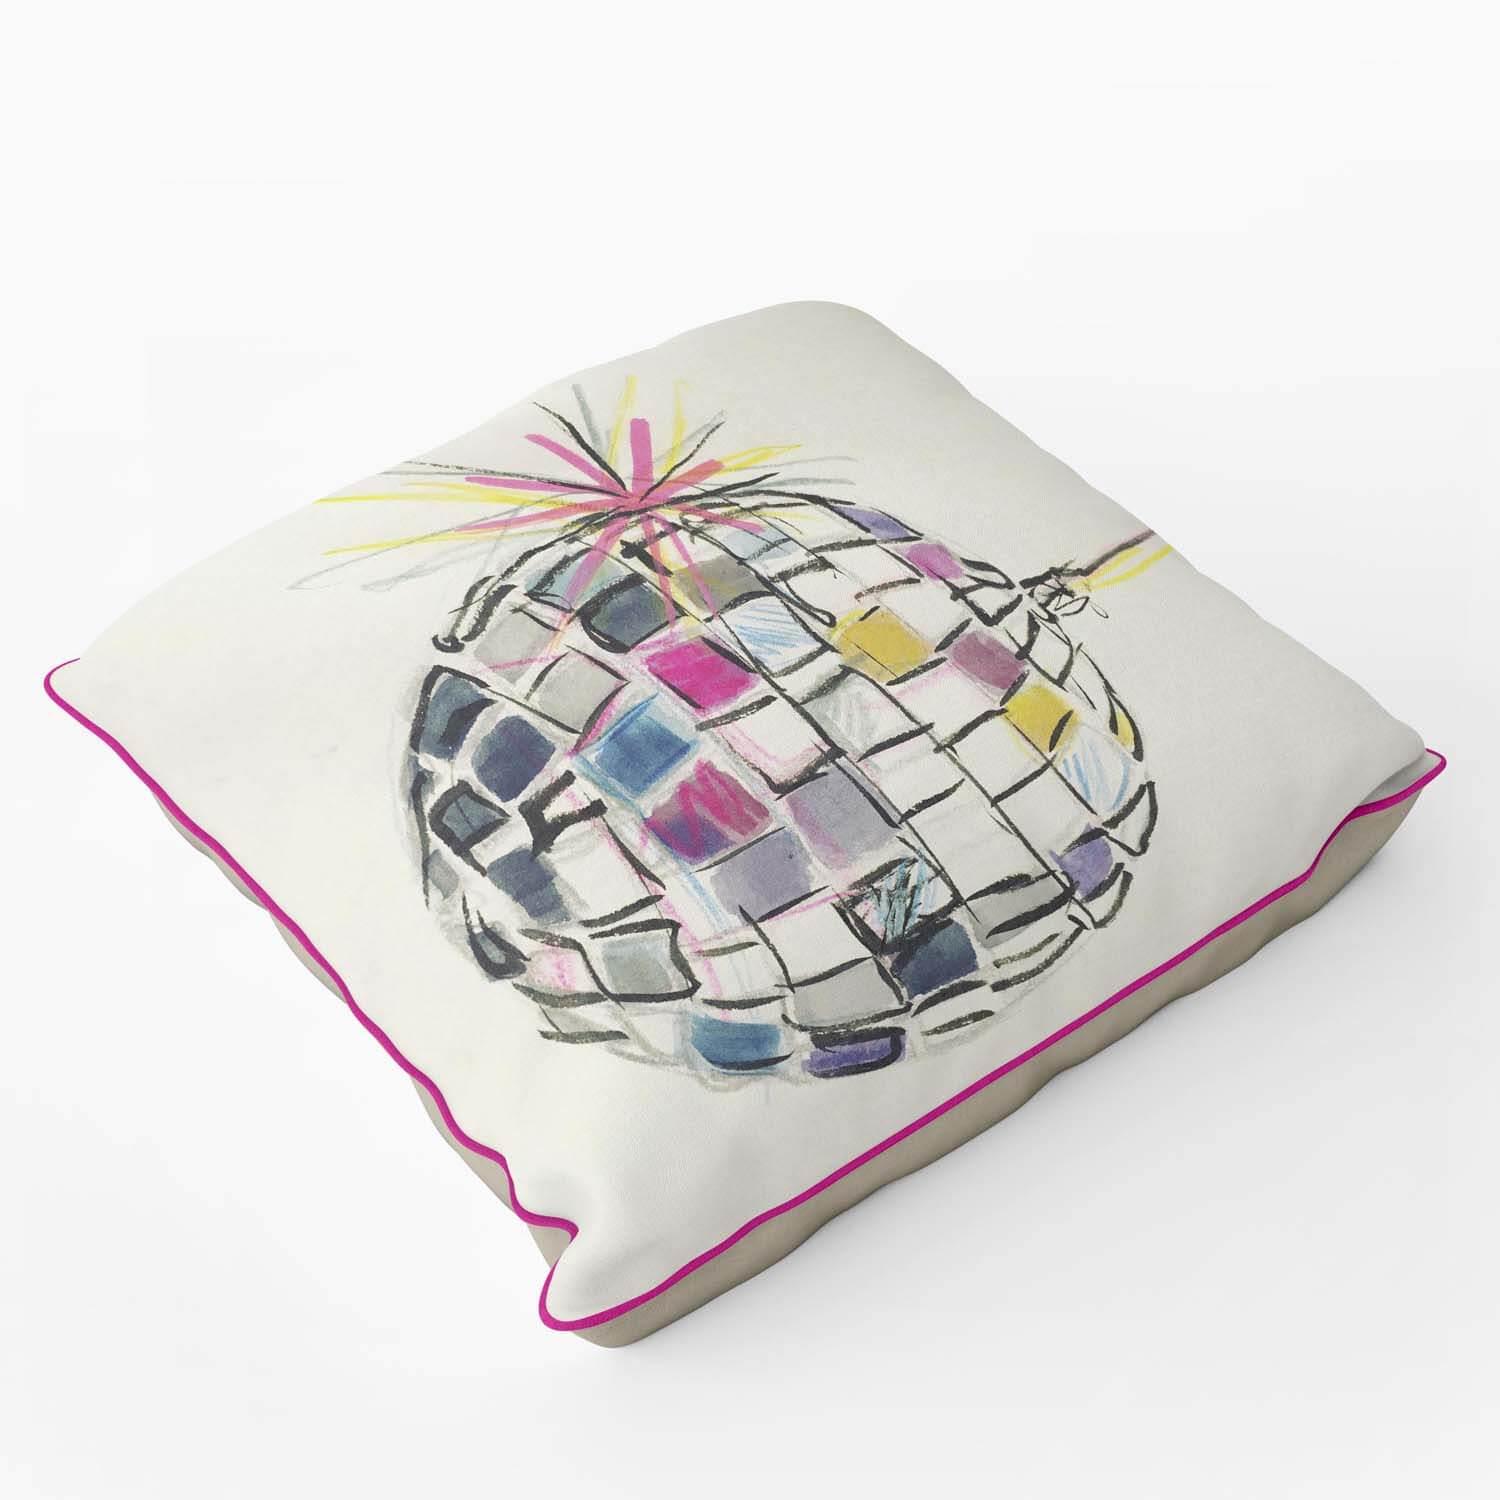 Disco Ball Collection - Ibiza - Sarah Thornton Cushion - Handmade Cushions UK - WeLoveCushions